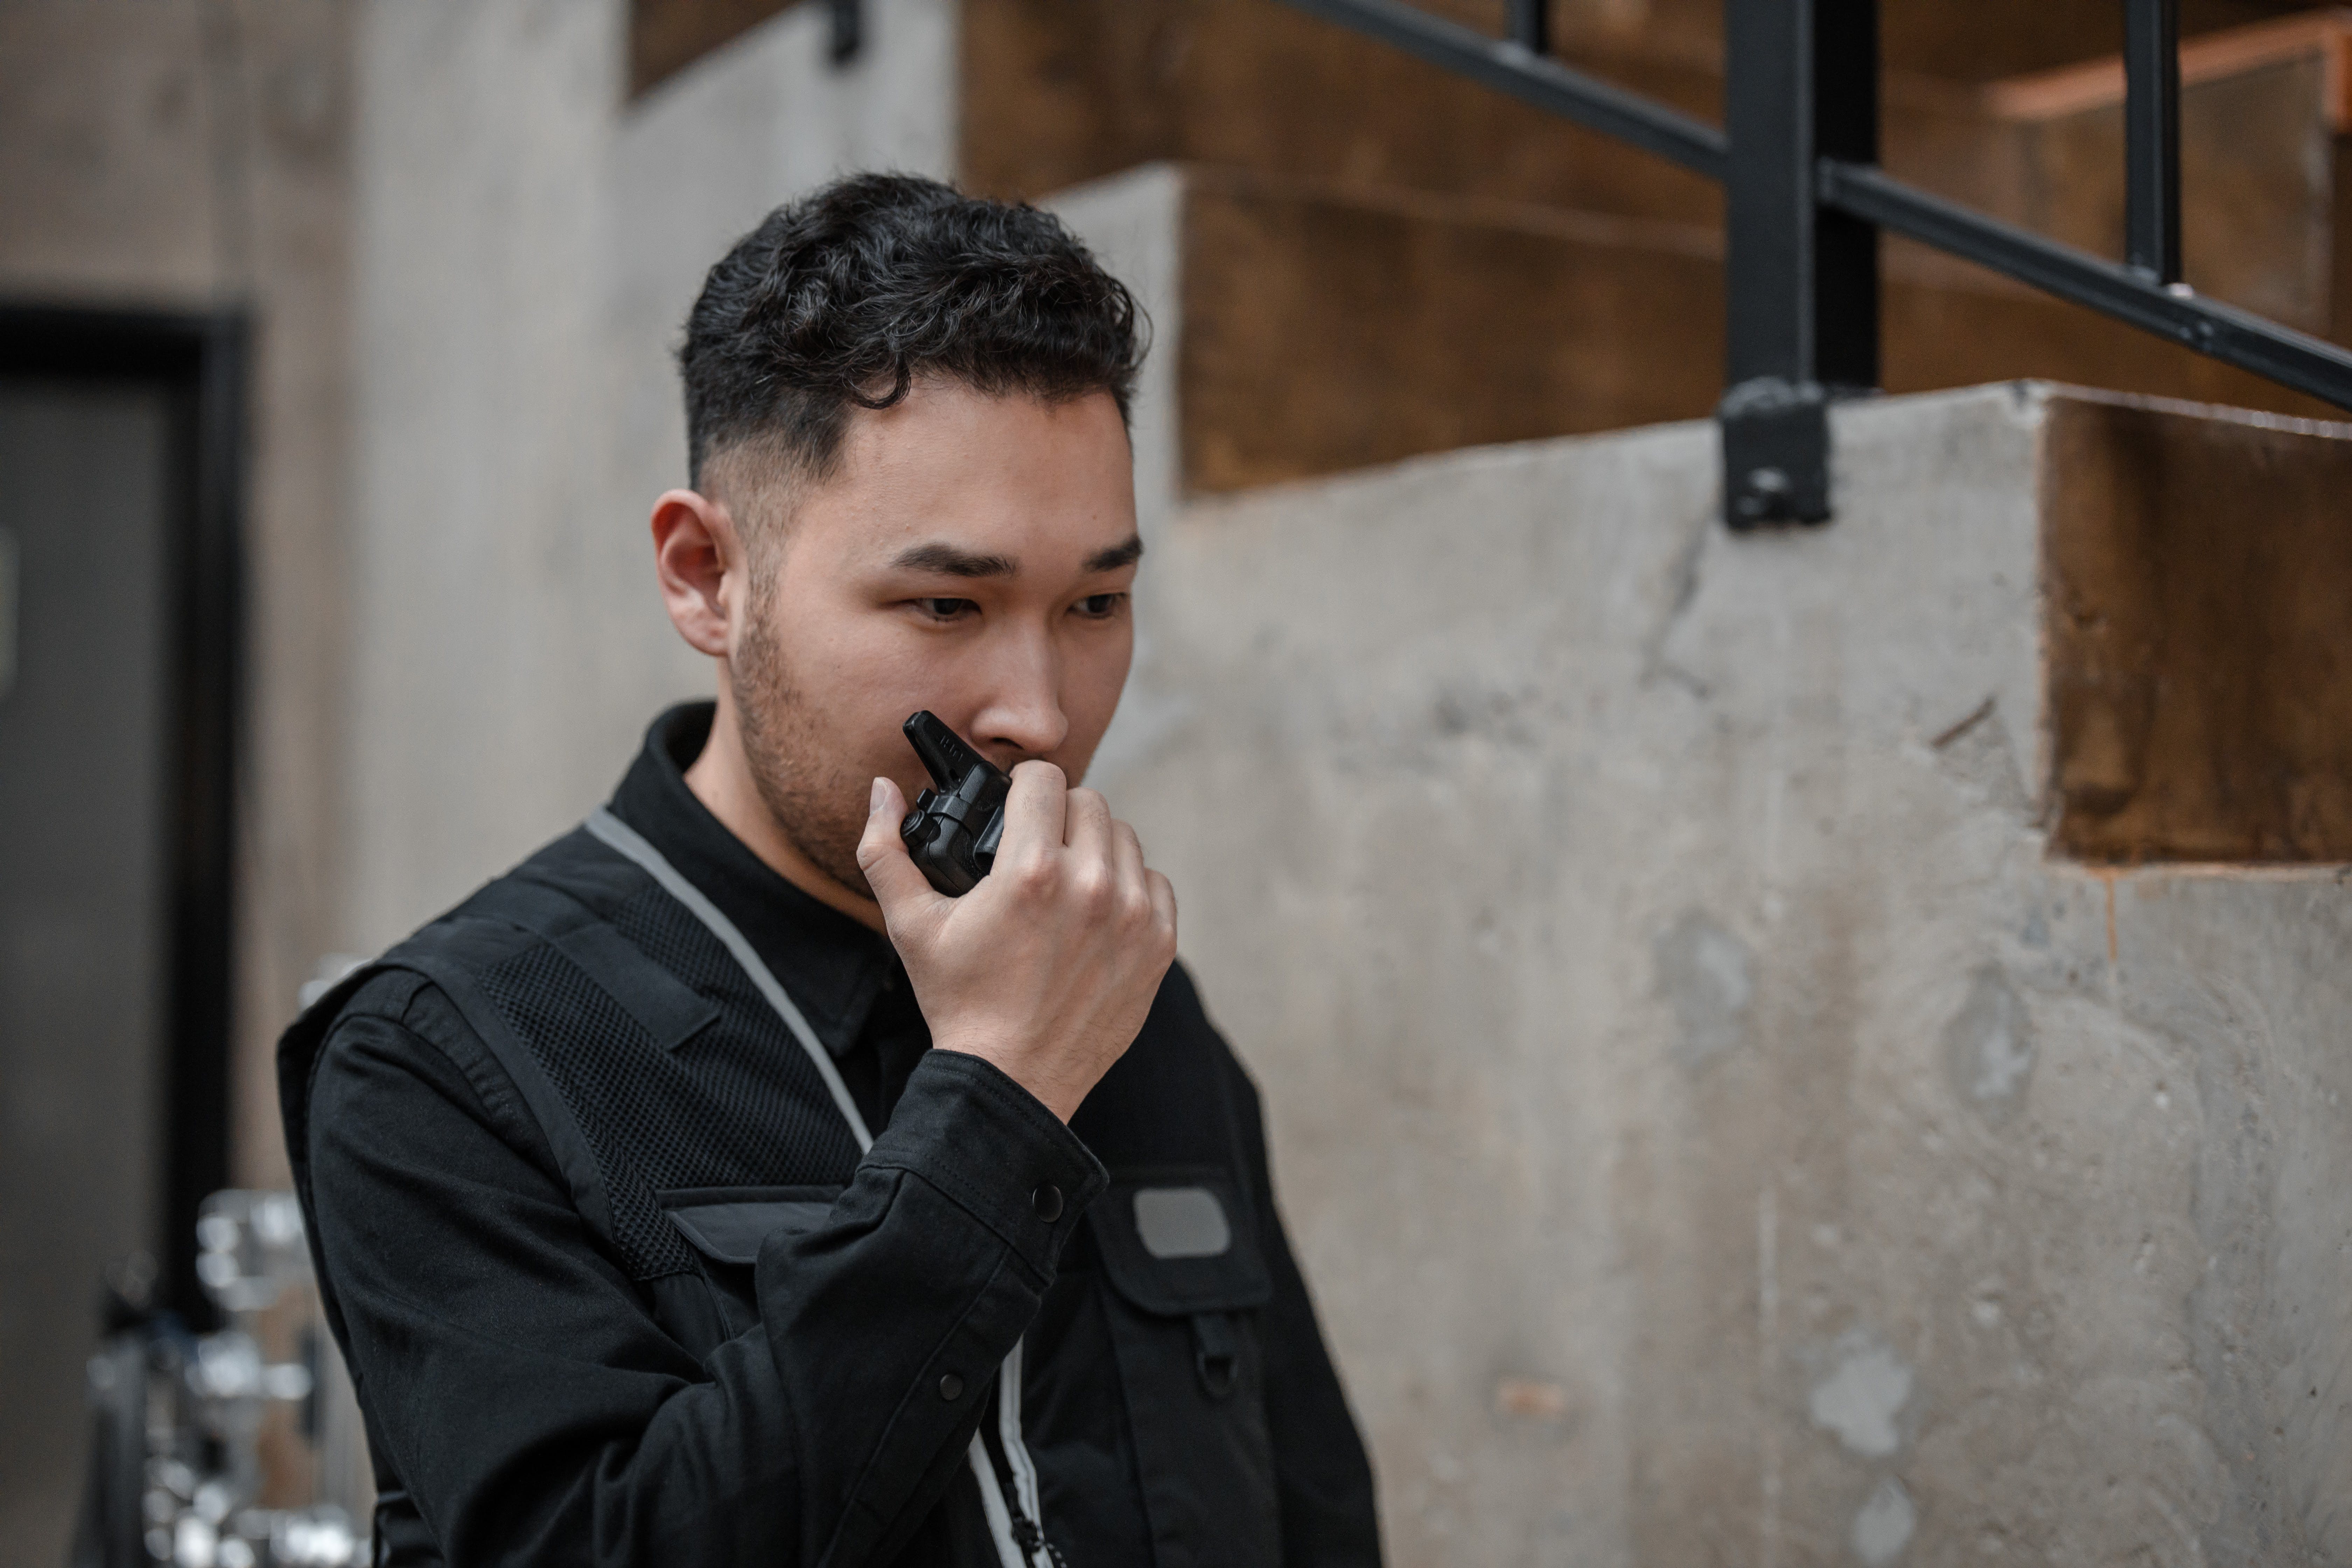 A security man talking on a walkie talkie. | Source: Pexels